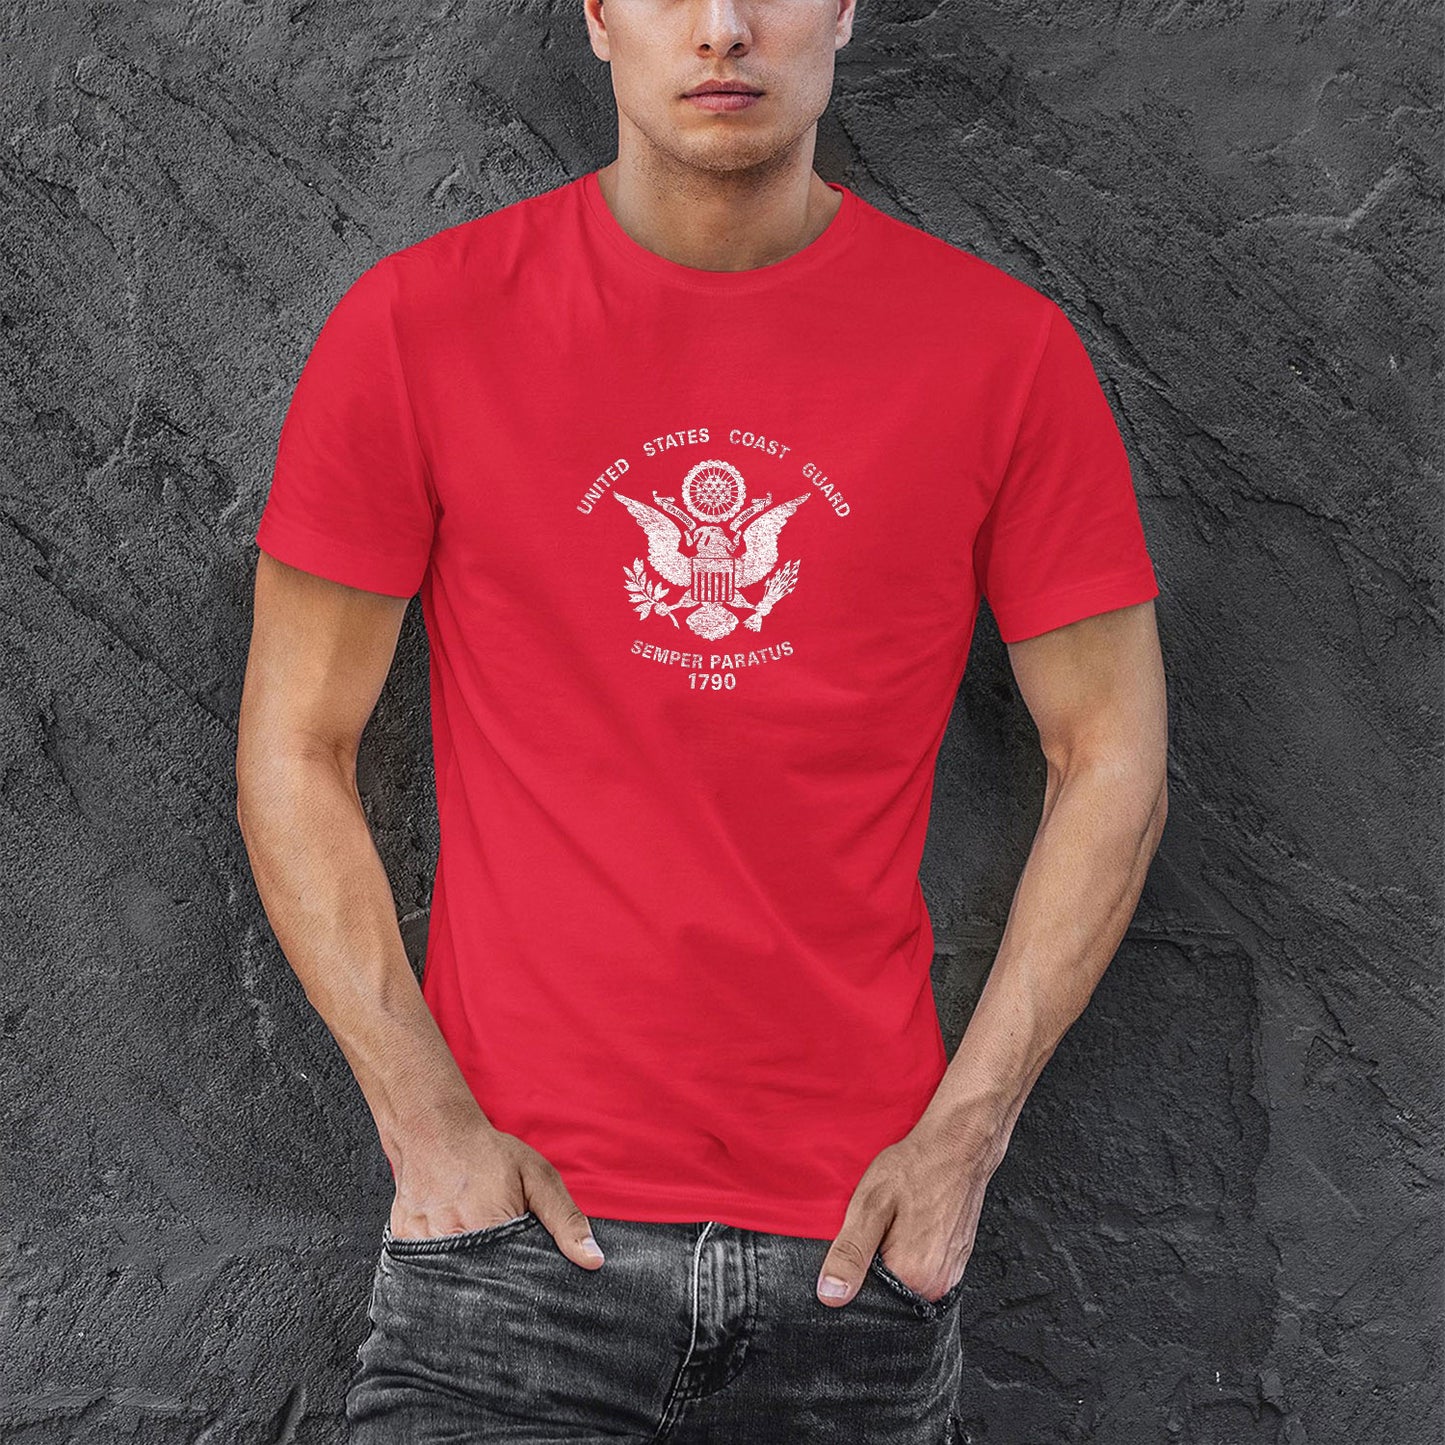 Memorial Day 2021 Uscg Tee Shirts, US UNITED STATES COAST GUARD USCG EAGLE FLAG Shirt For Men, Cotton Shirt, Air Force Memorial Shirt, Usaf T Shirt